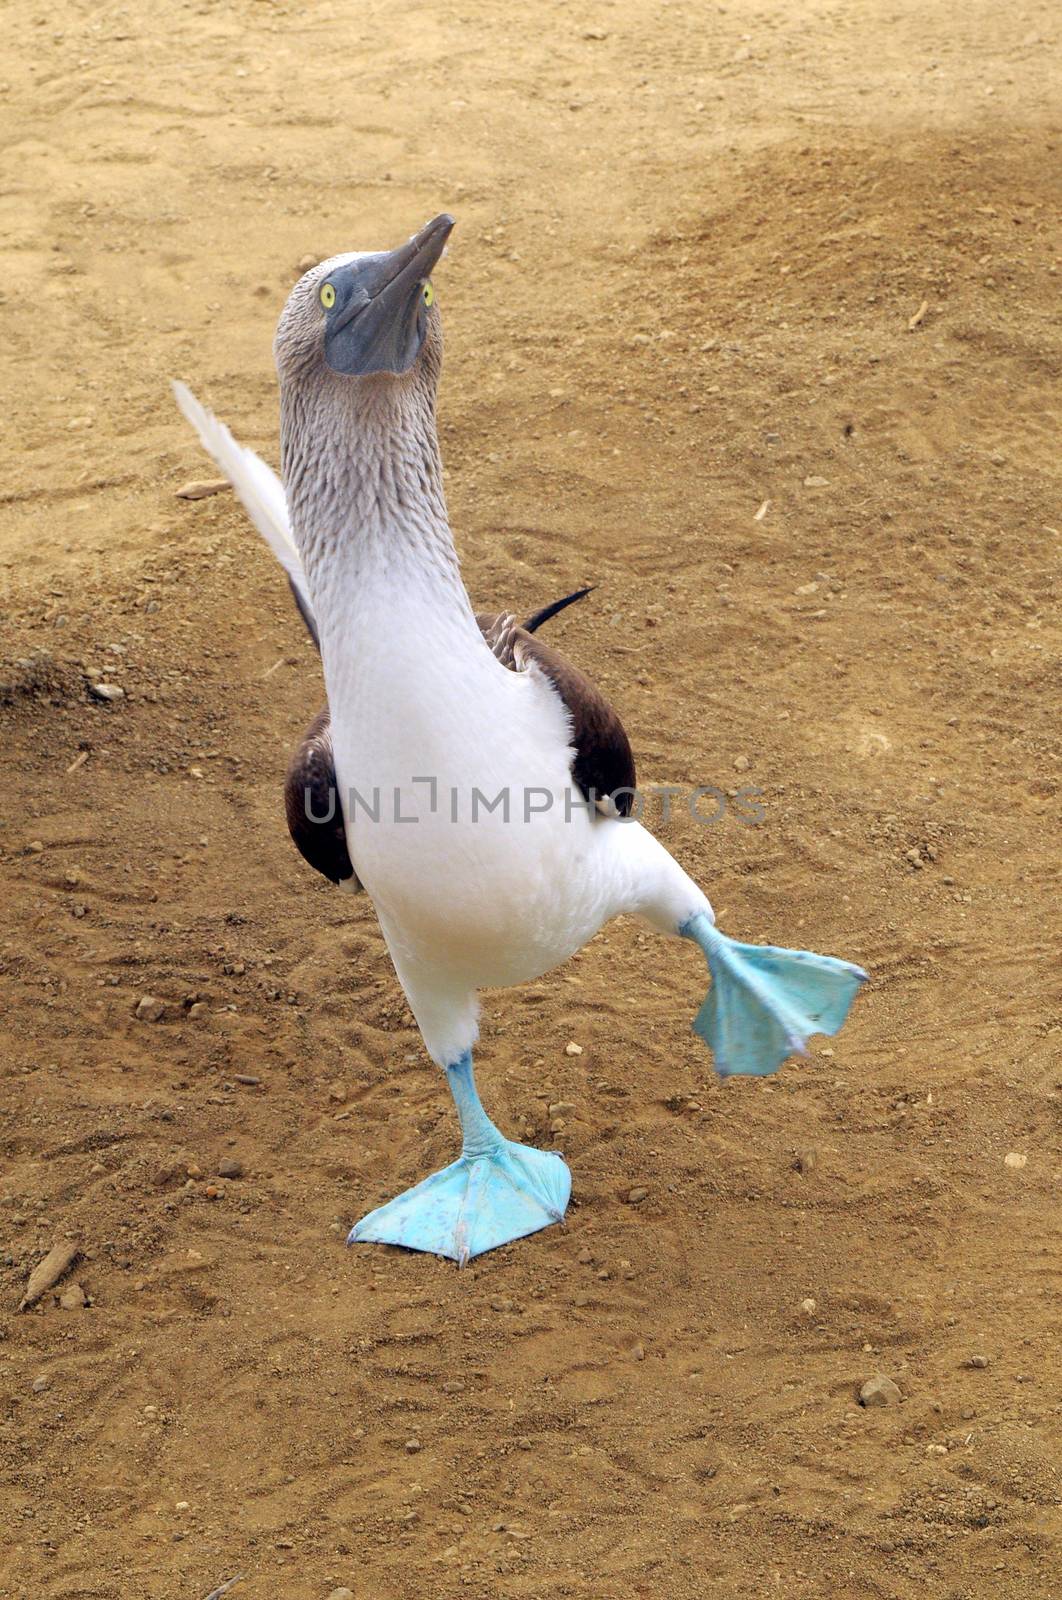 Cheerful mating dance of Blue-footed boobie. Galapagos, Ecuador